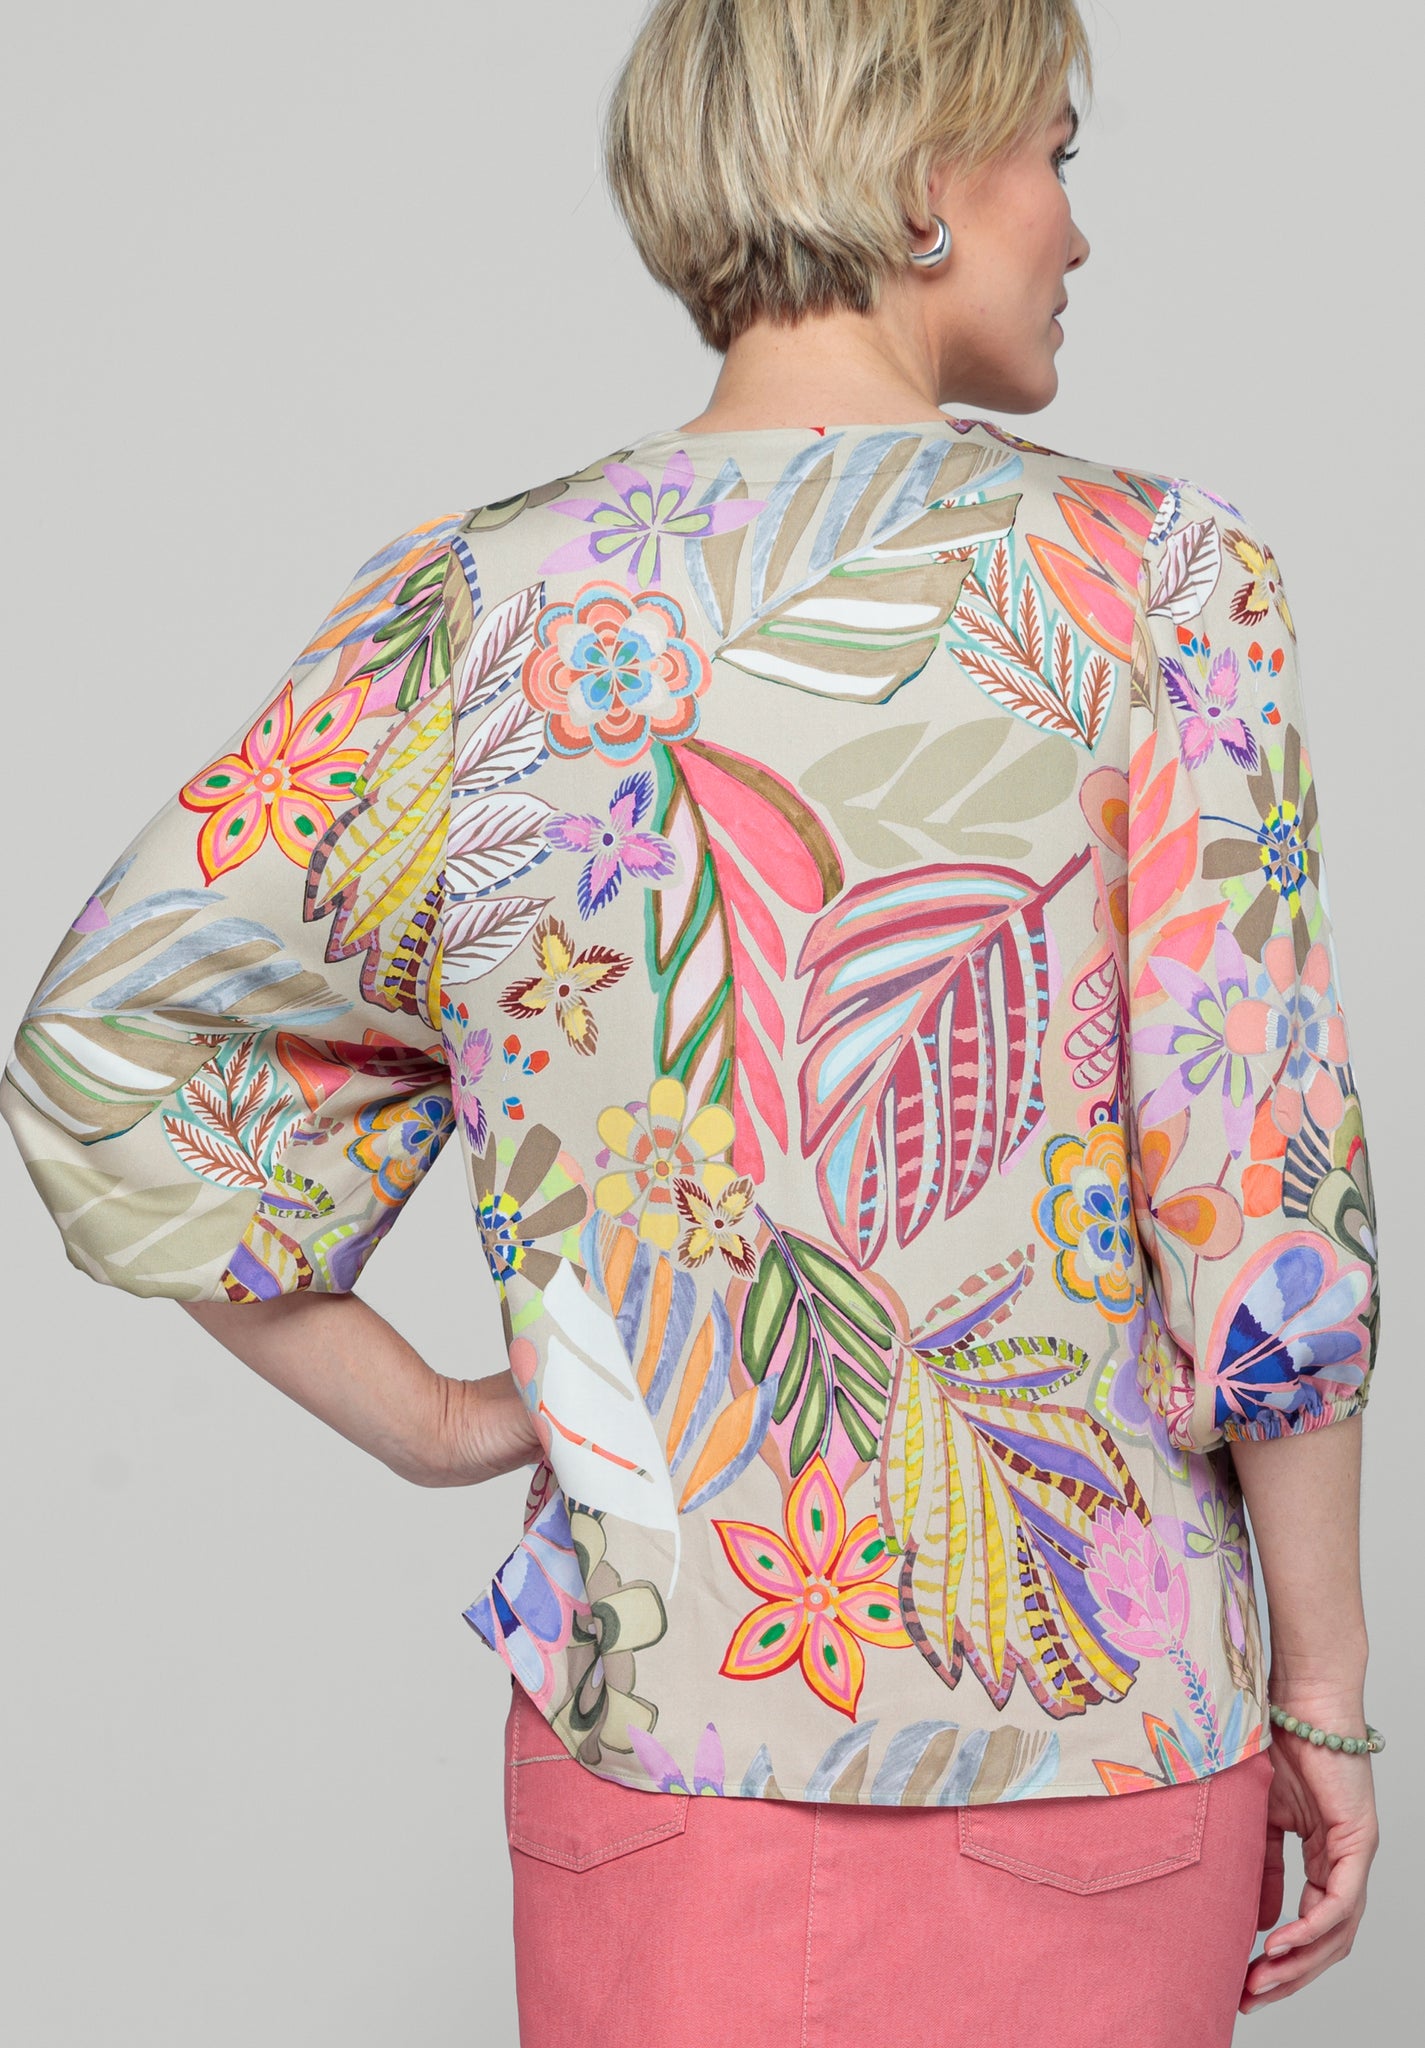 Bianca Alena printed blouse 
Product code 35031